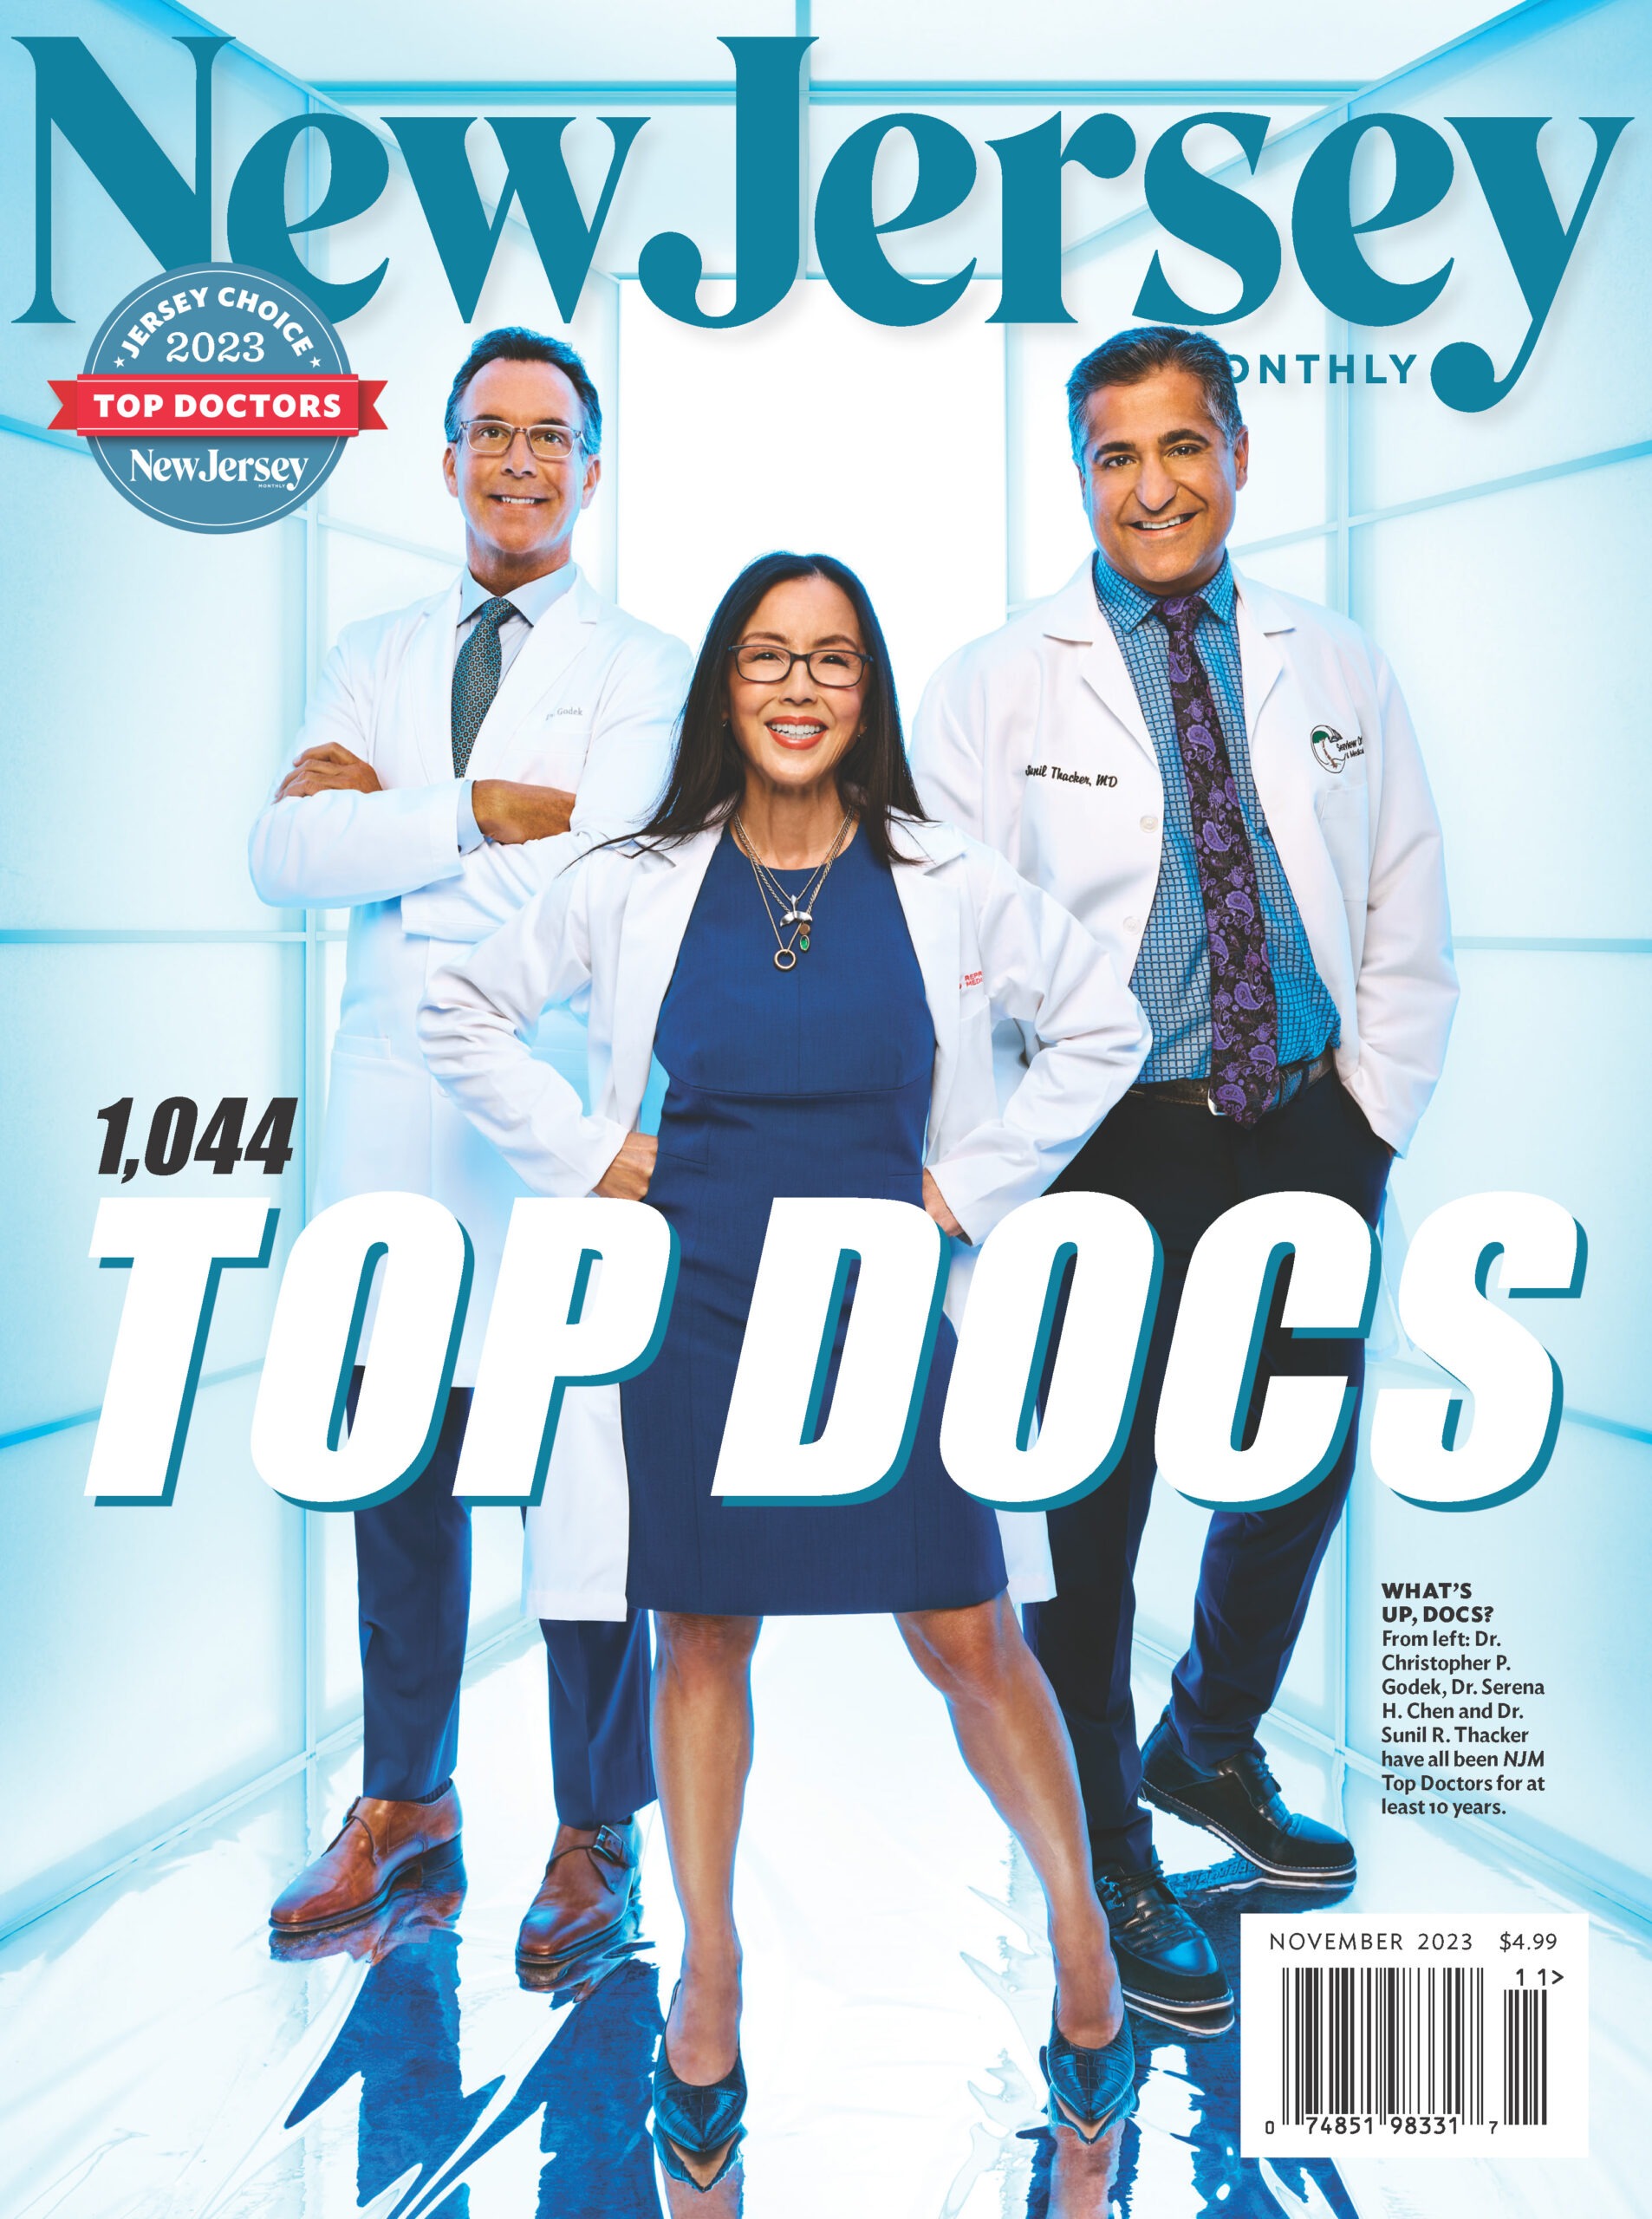 Top Doctors in New Jersey 2023 Seaview Orthopaedics